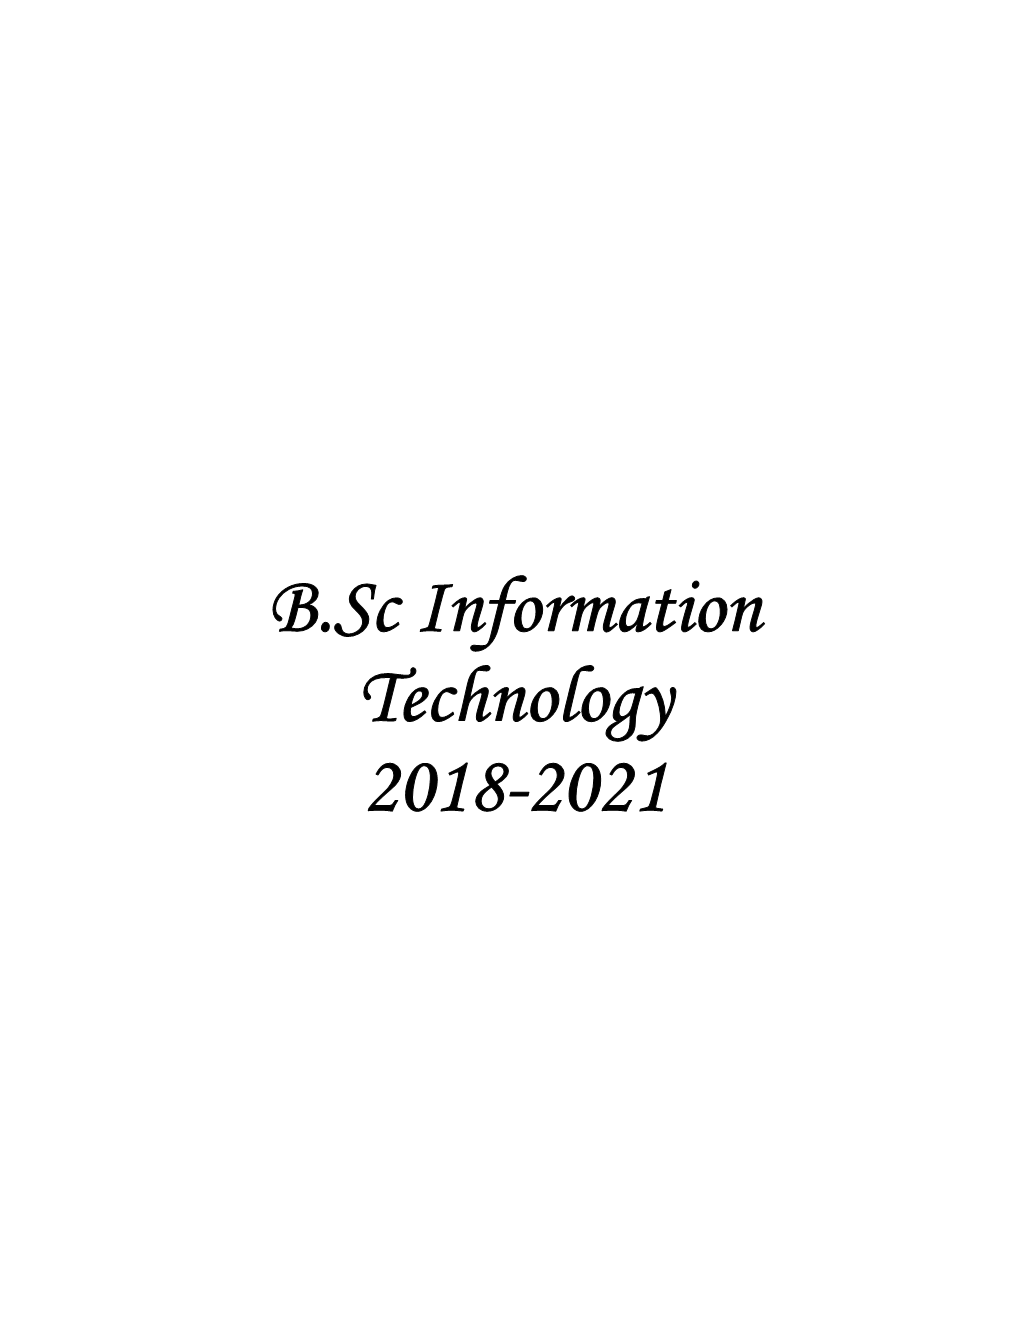 B.Sc Information Technology 2018-2021